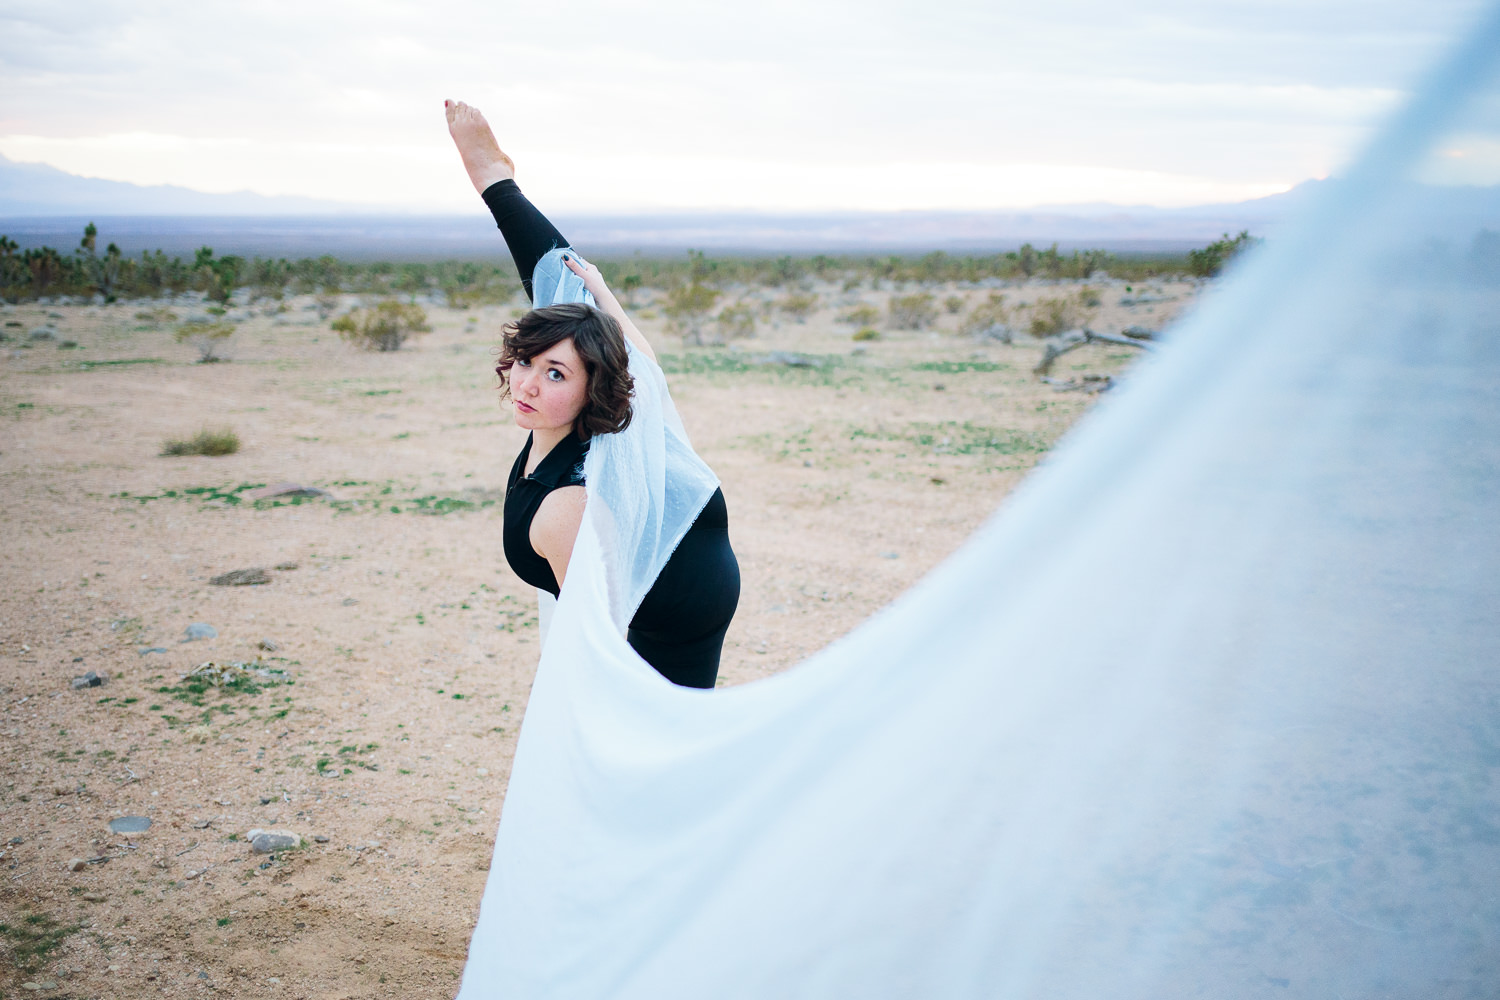 Desert silk dancer Southern Utah Adventure photographer hybrid film and digital